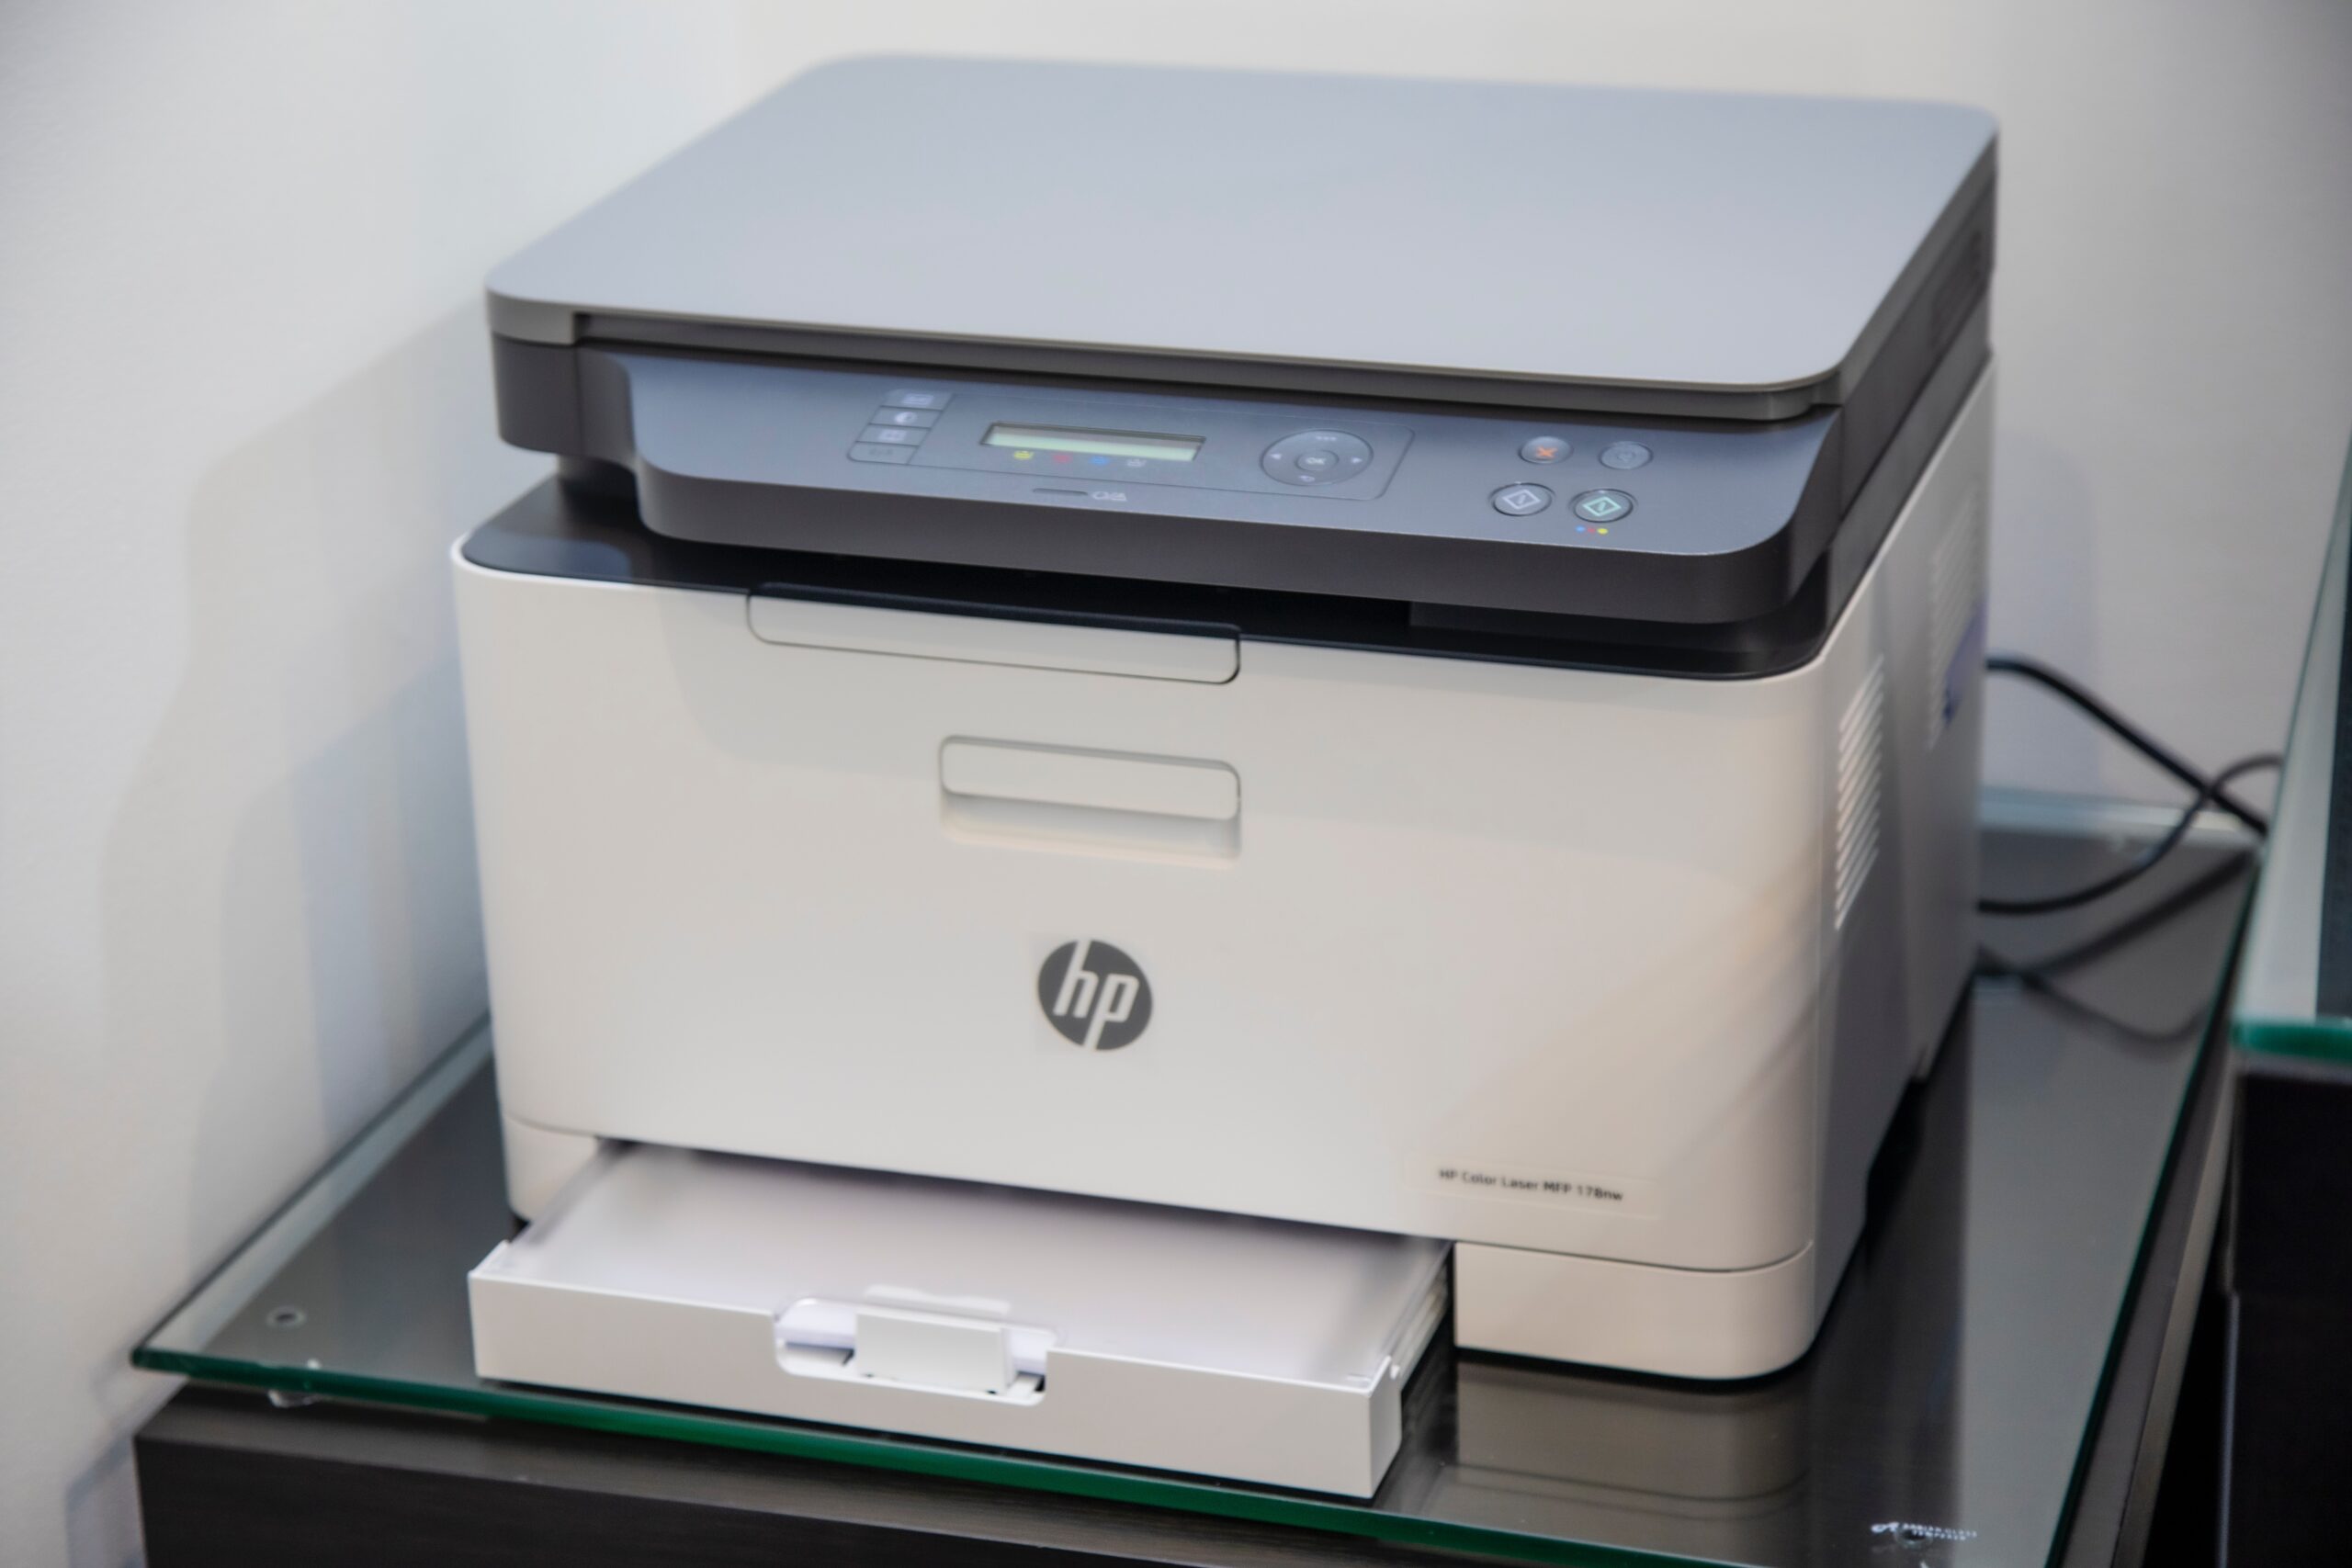 printer troubleshooting